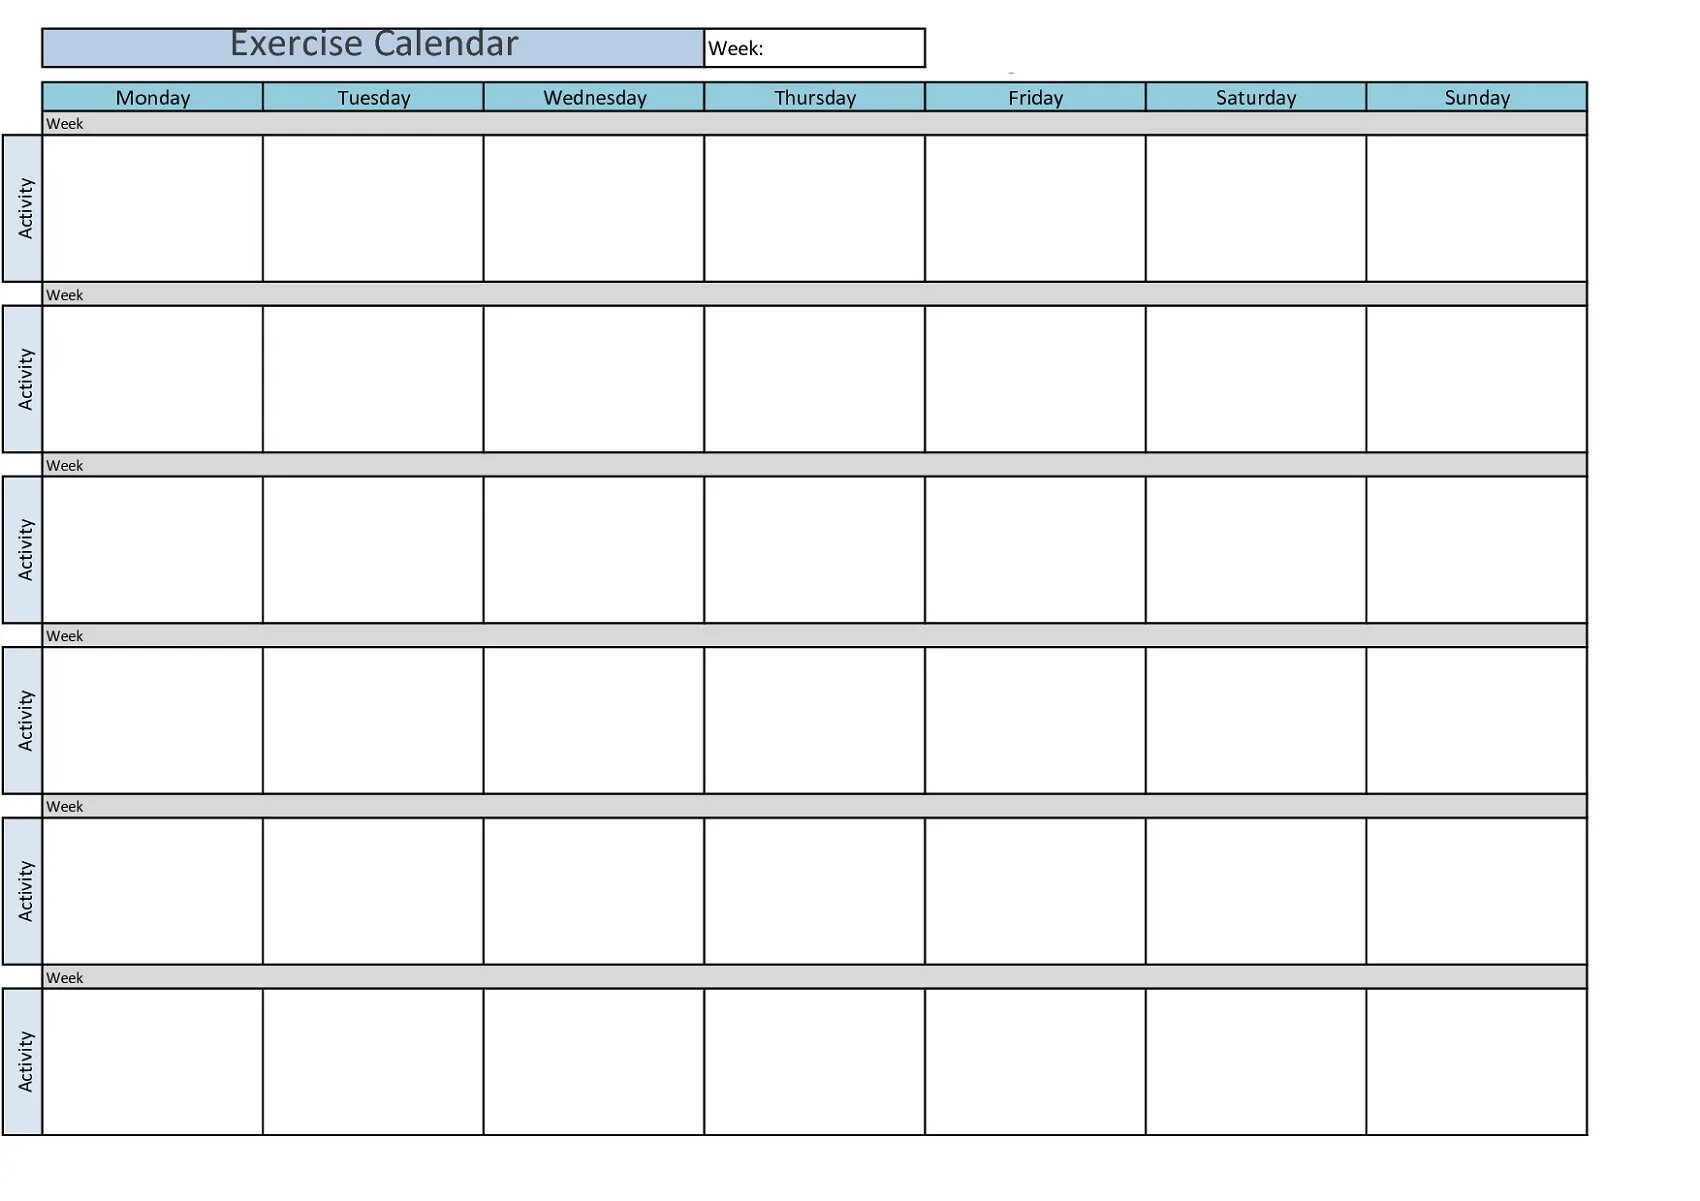 Лист месяца календаря. План тренировок таблица пустая. Таблица тренировок на месяц. График тренировок на месяц таблица пустая. План тренировок на месяц таблица.